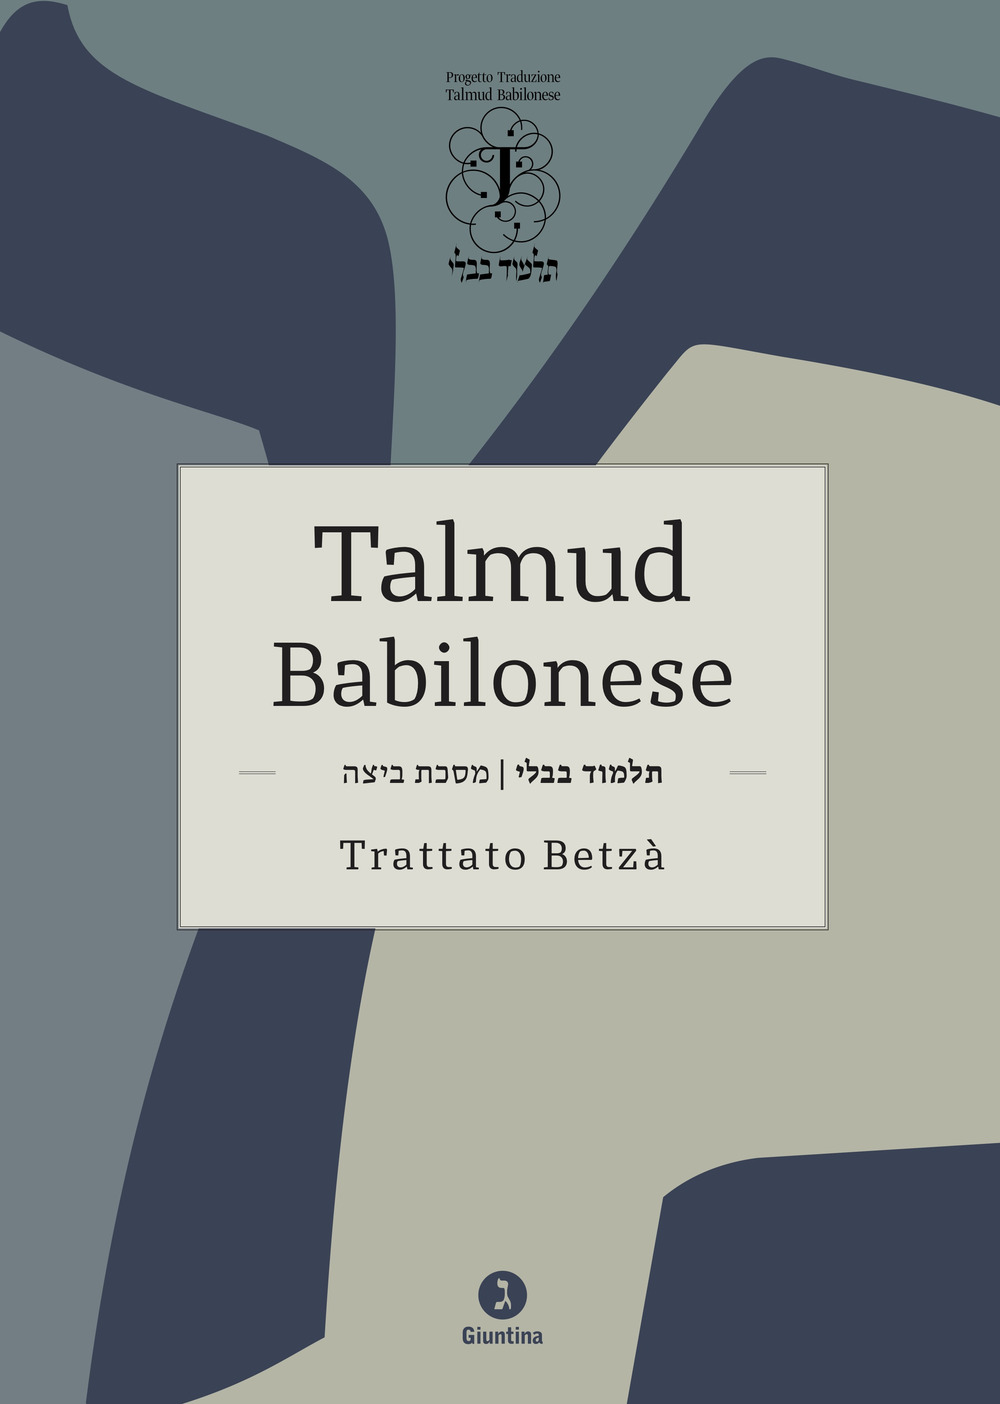 Talmud babilonese. Trattato Betzà